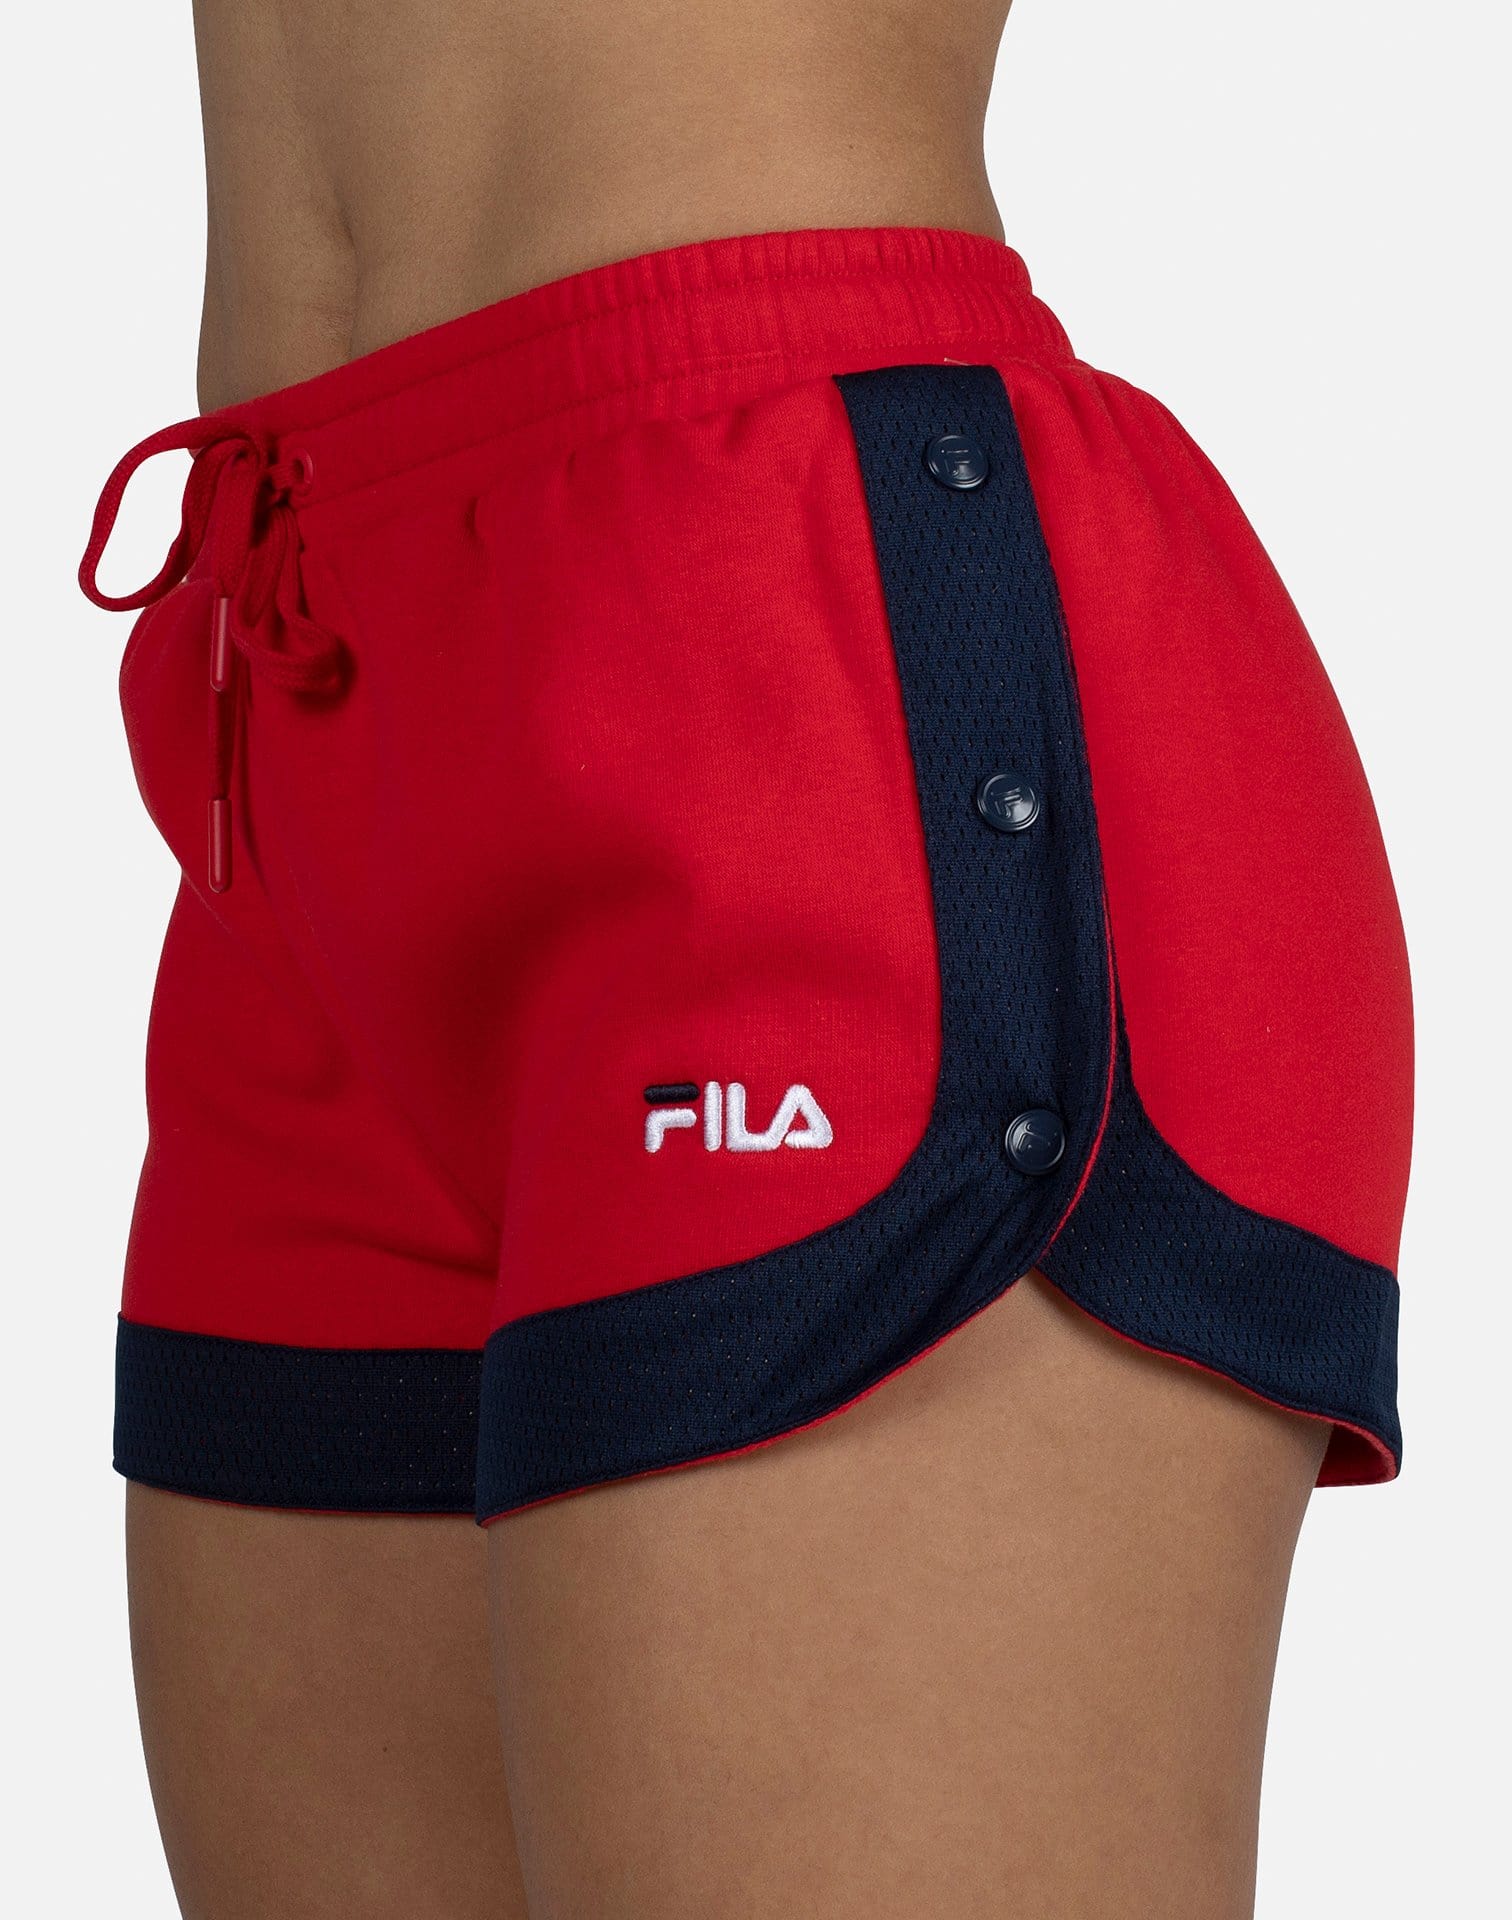 FILA Women's Danita Side Snap Shorts